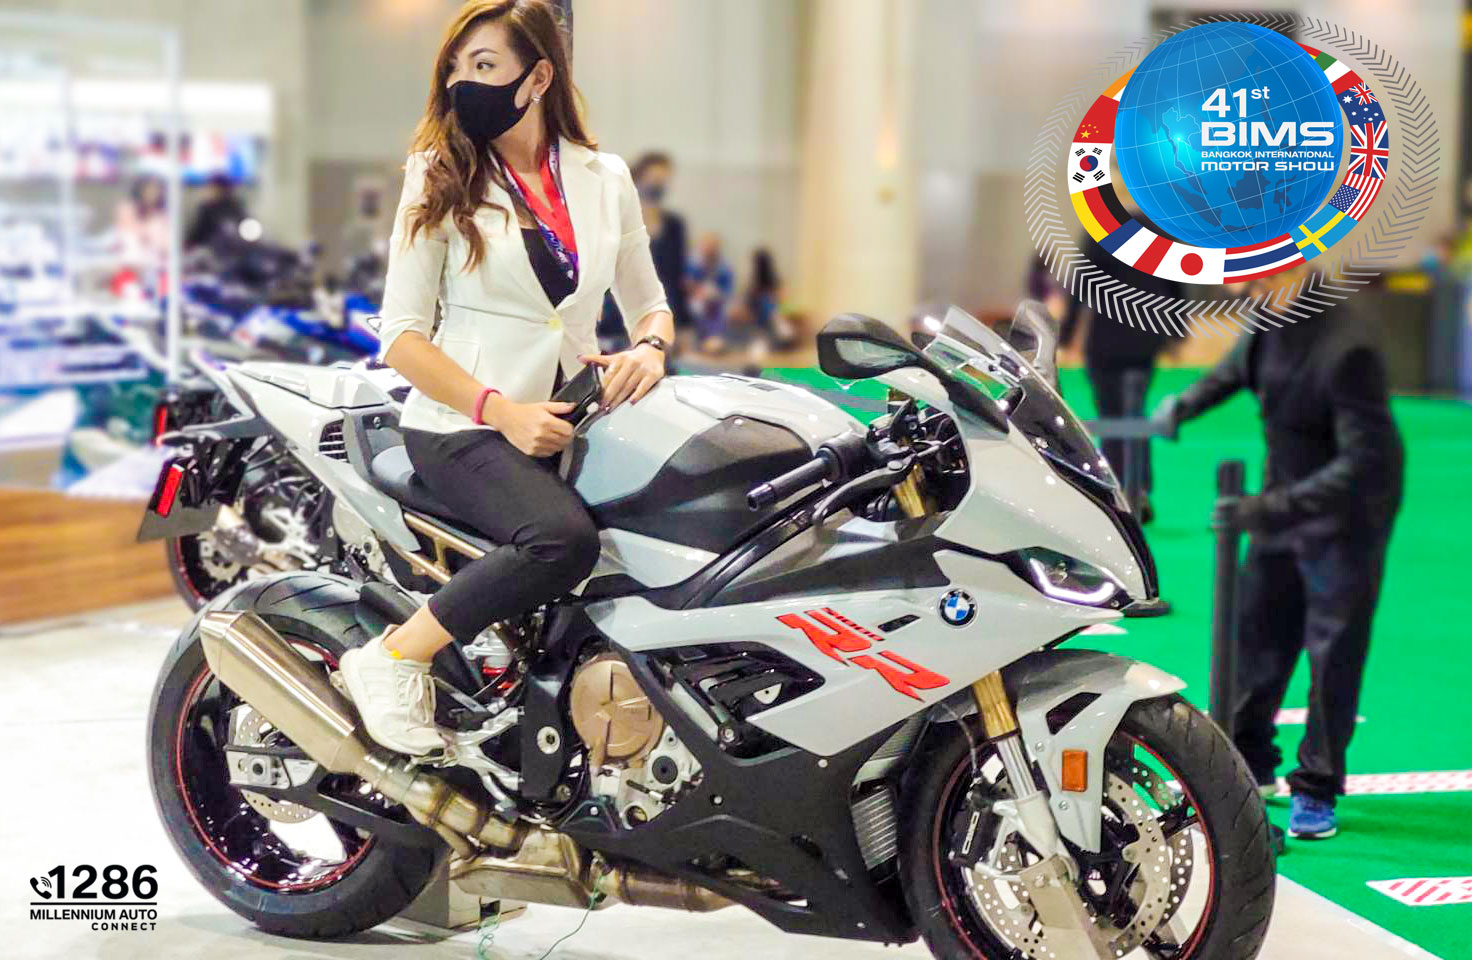 BMW Motorrad Motor Show 2020